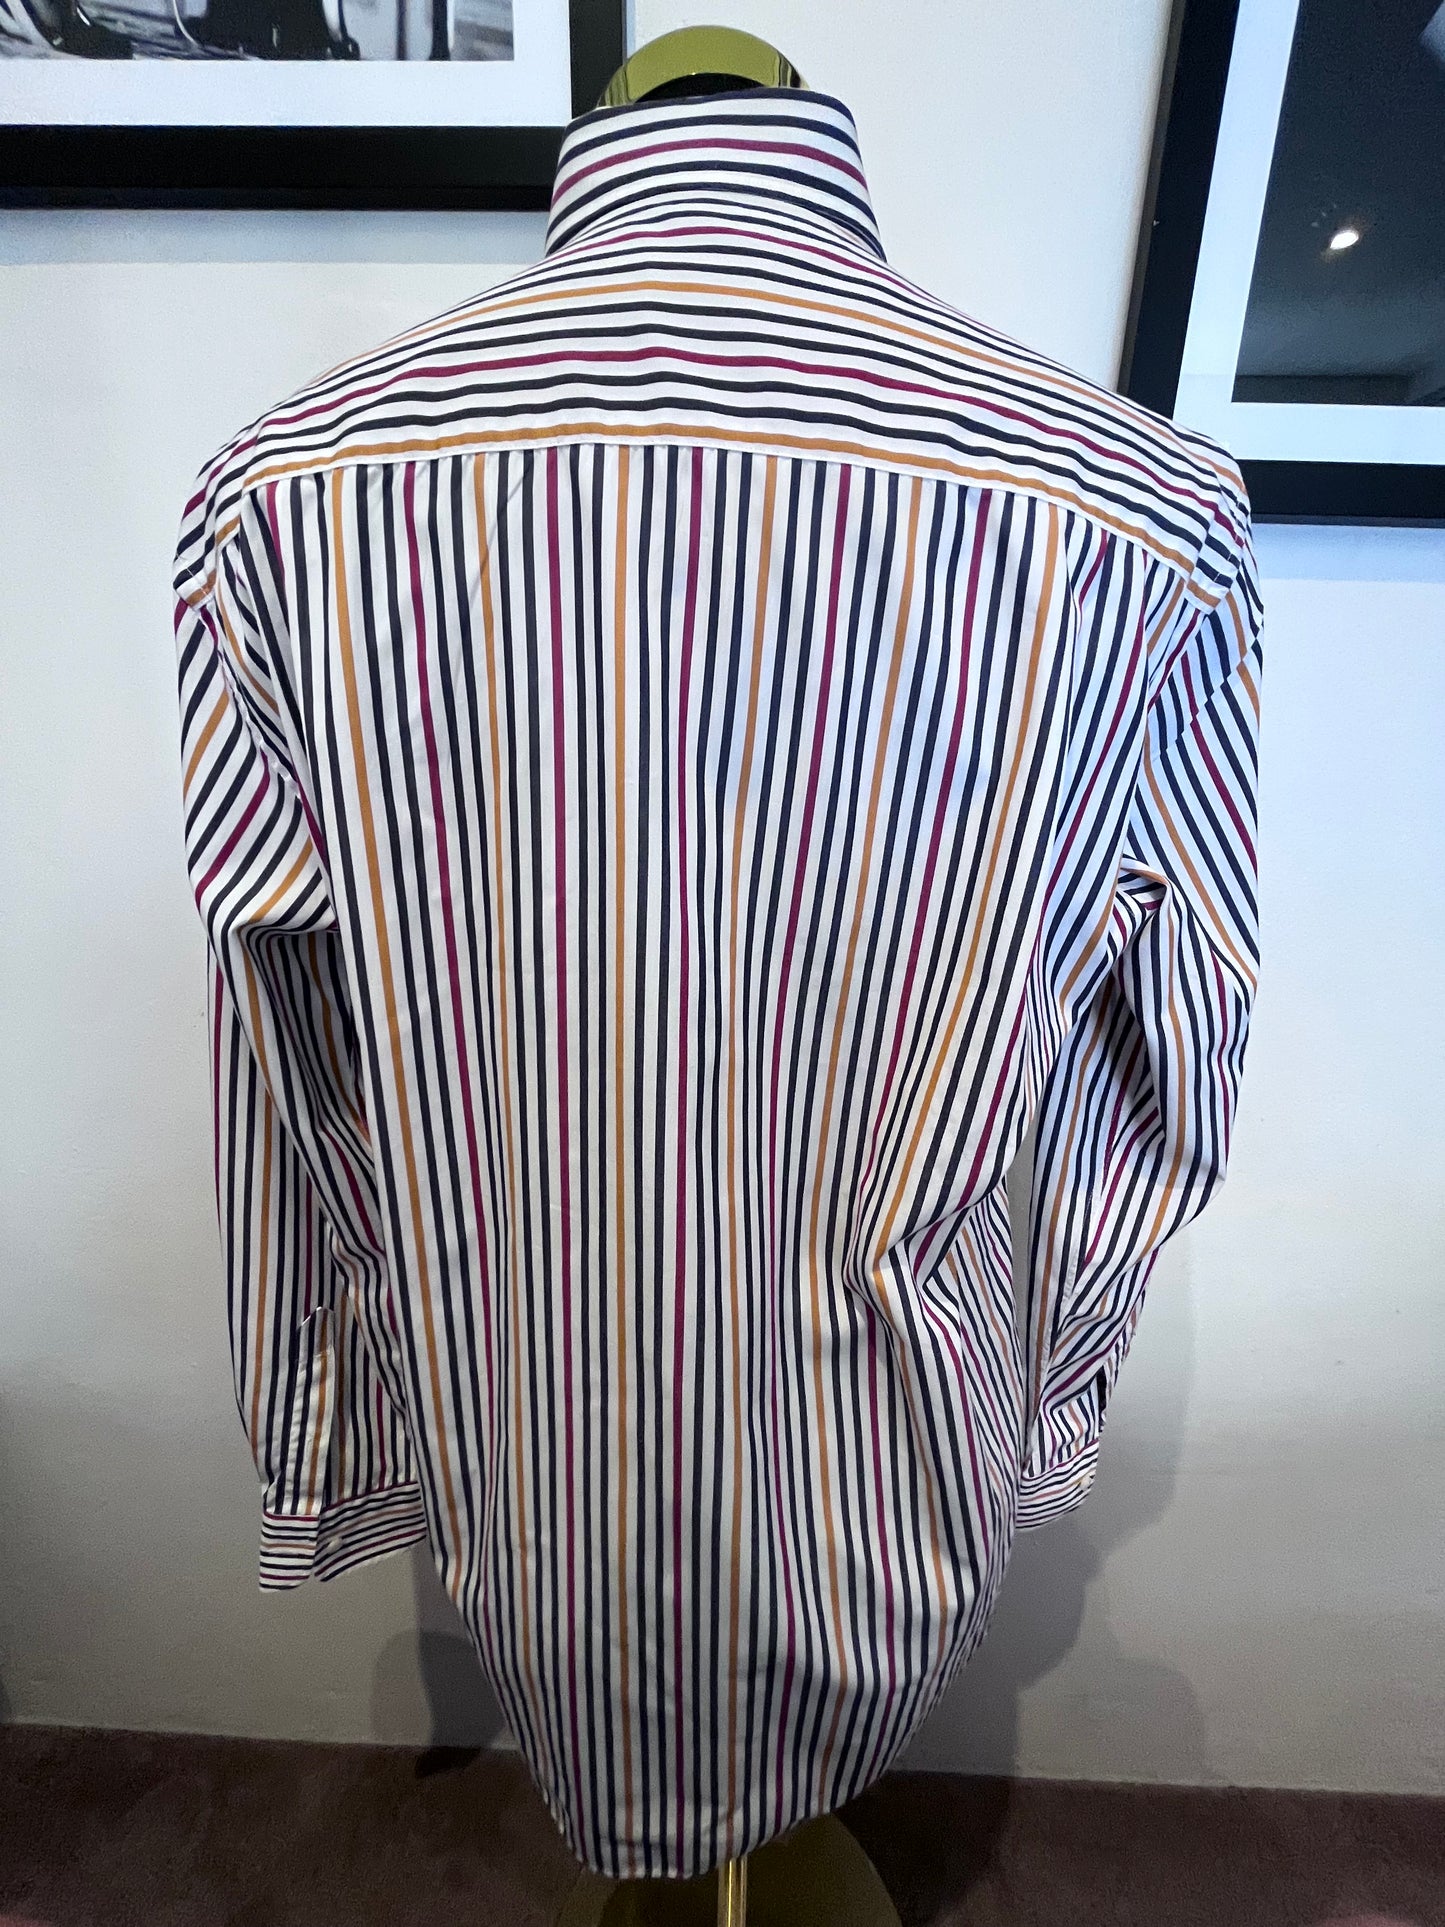 Paul & Shark 100% Cotton Yellow Blue Stripe Shirt Size 39 M to L Classic Fit Button Down Collar